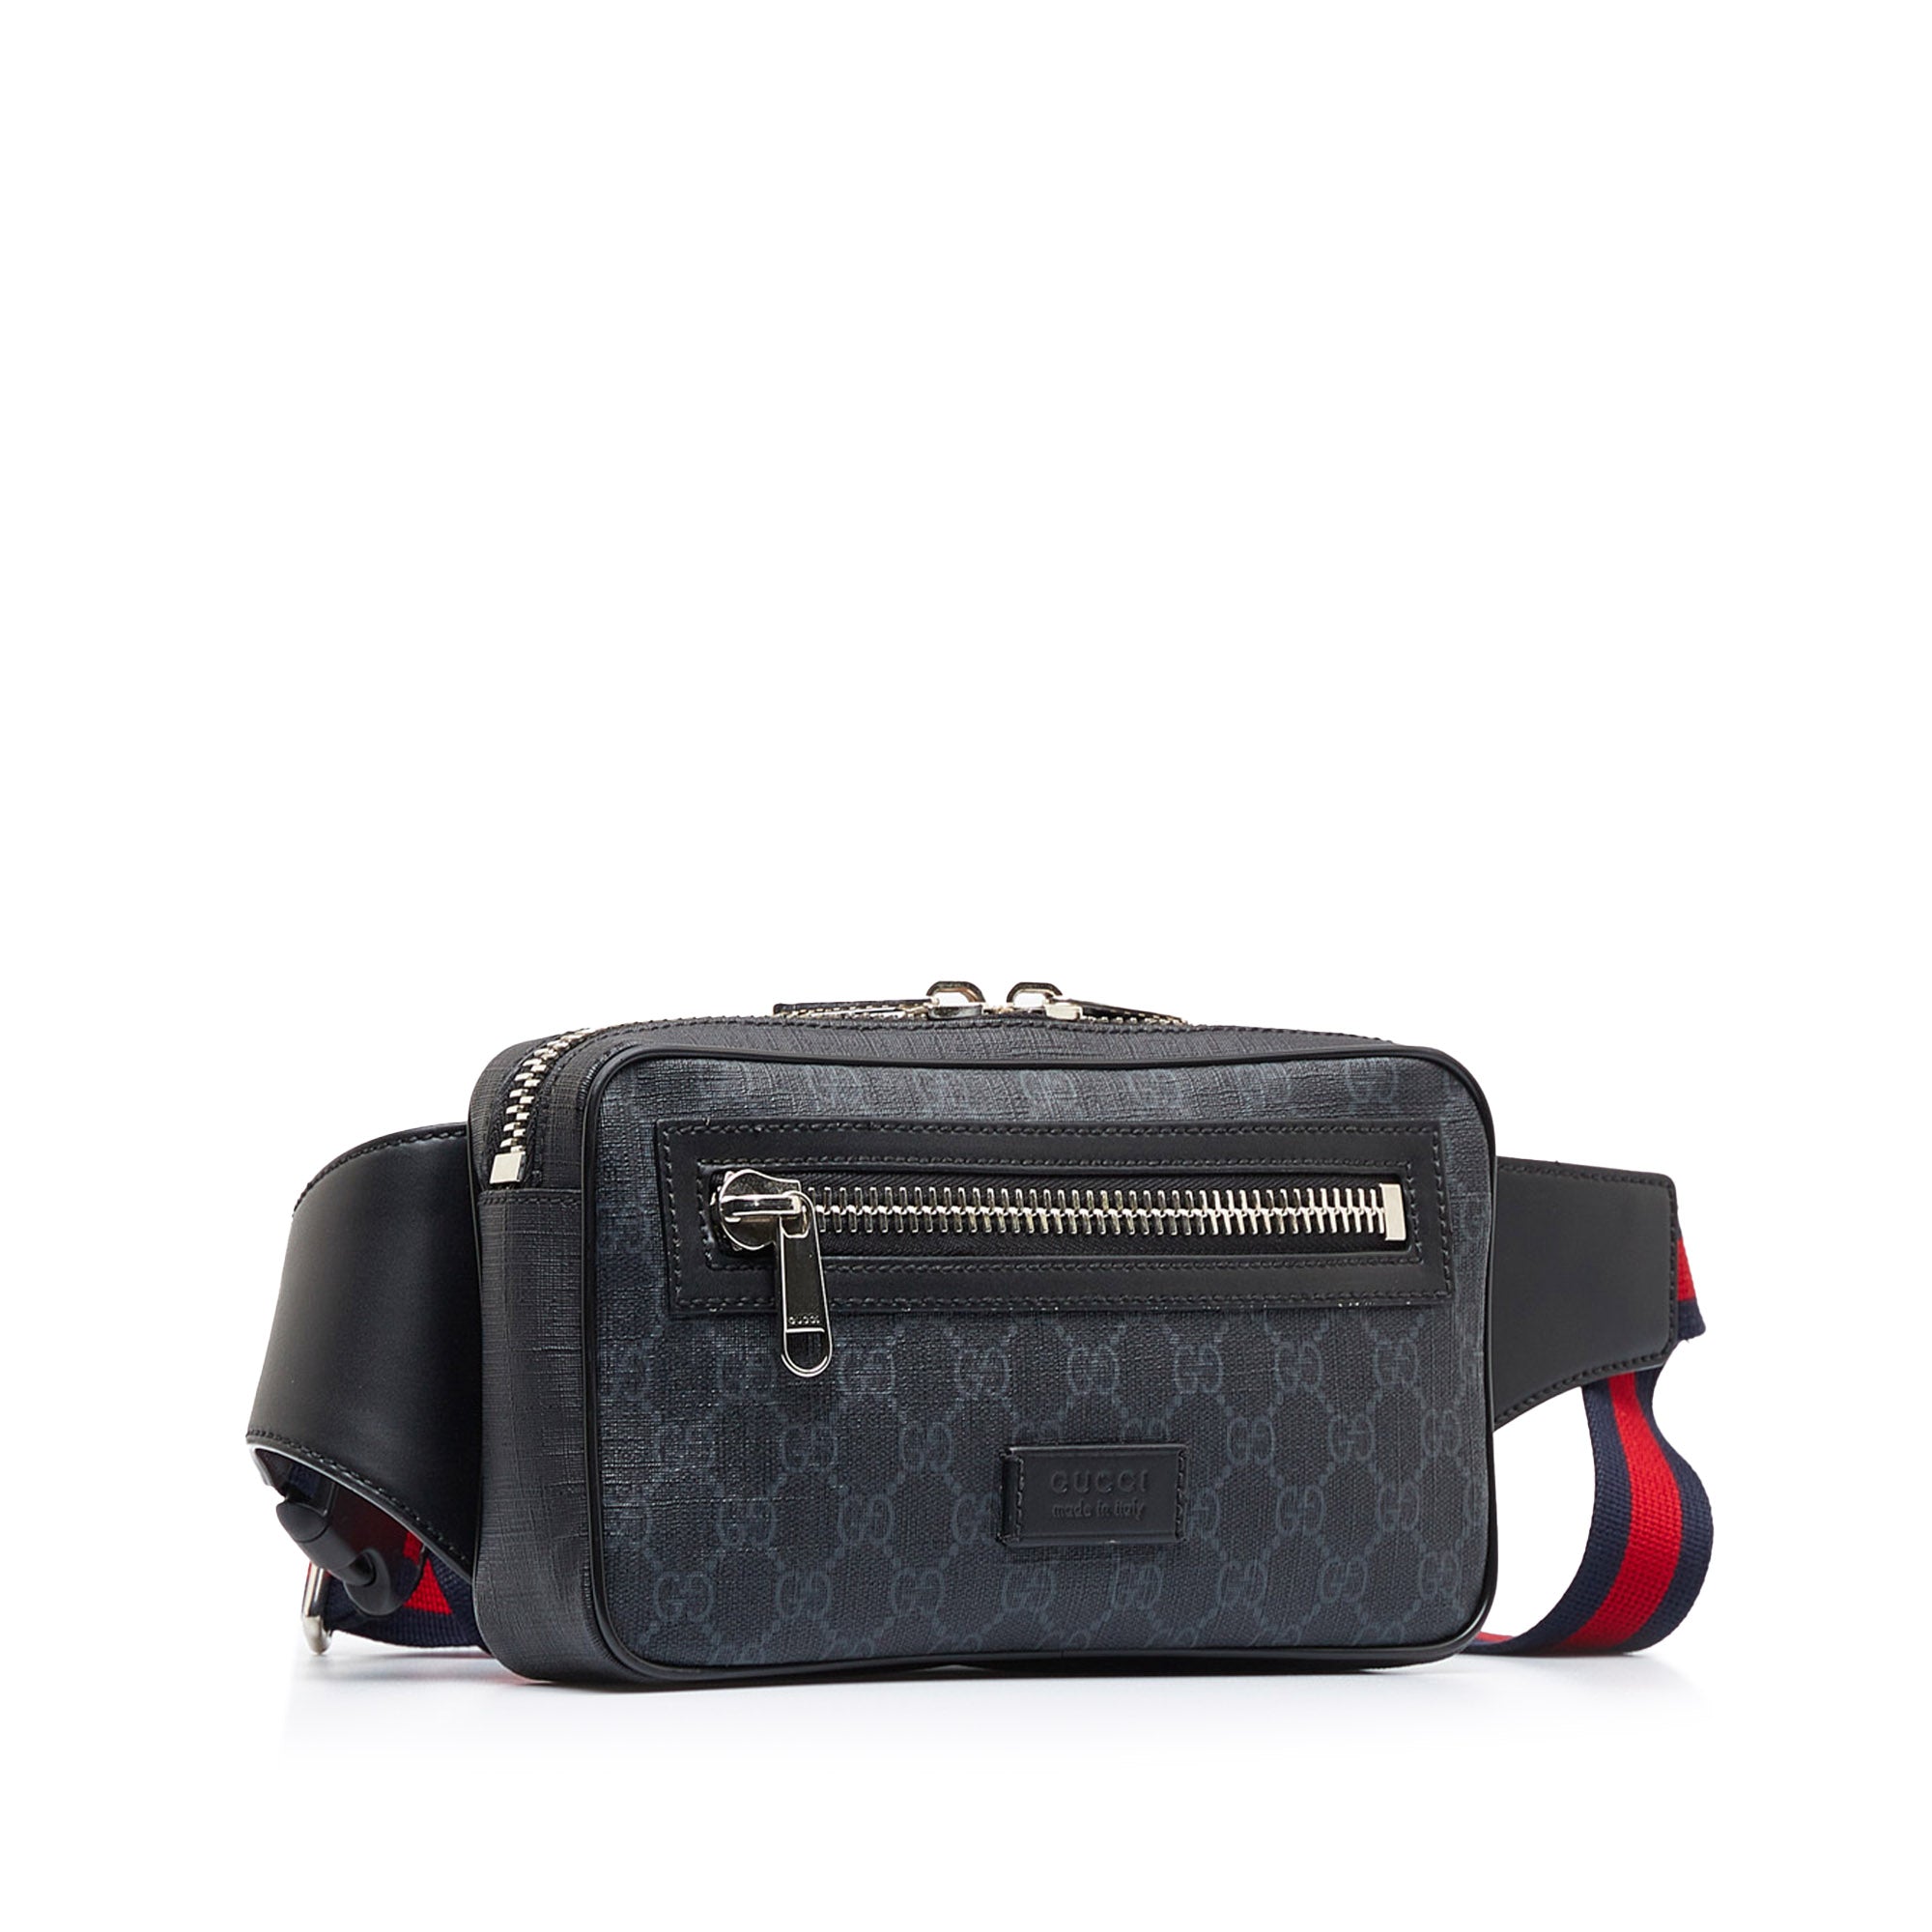 Black Gucci Gg Supreme Web Belt Bag